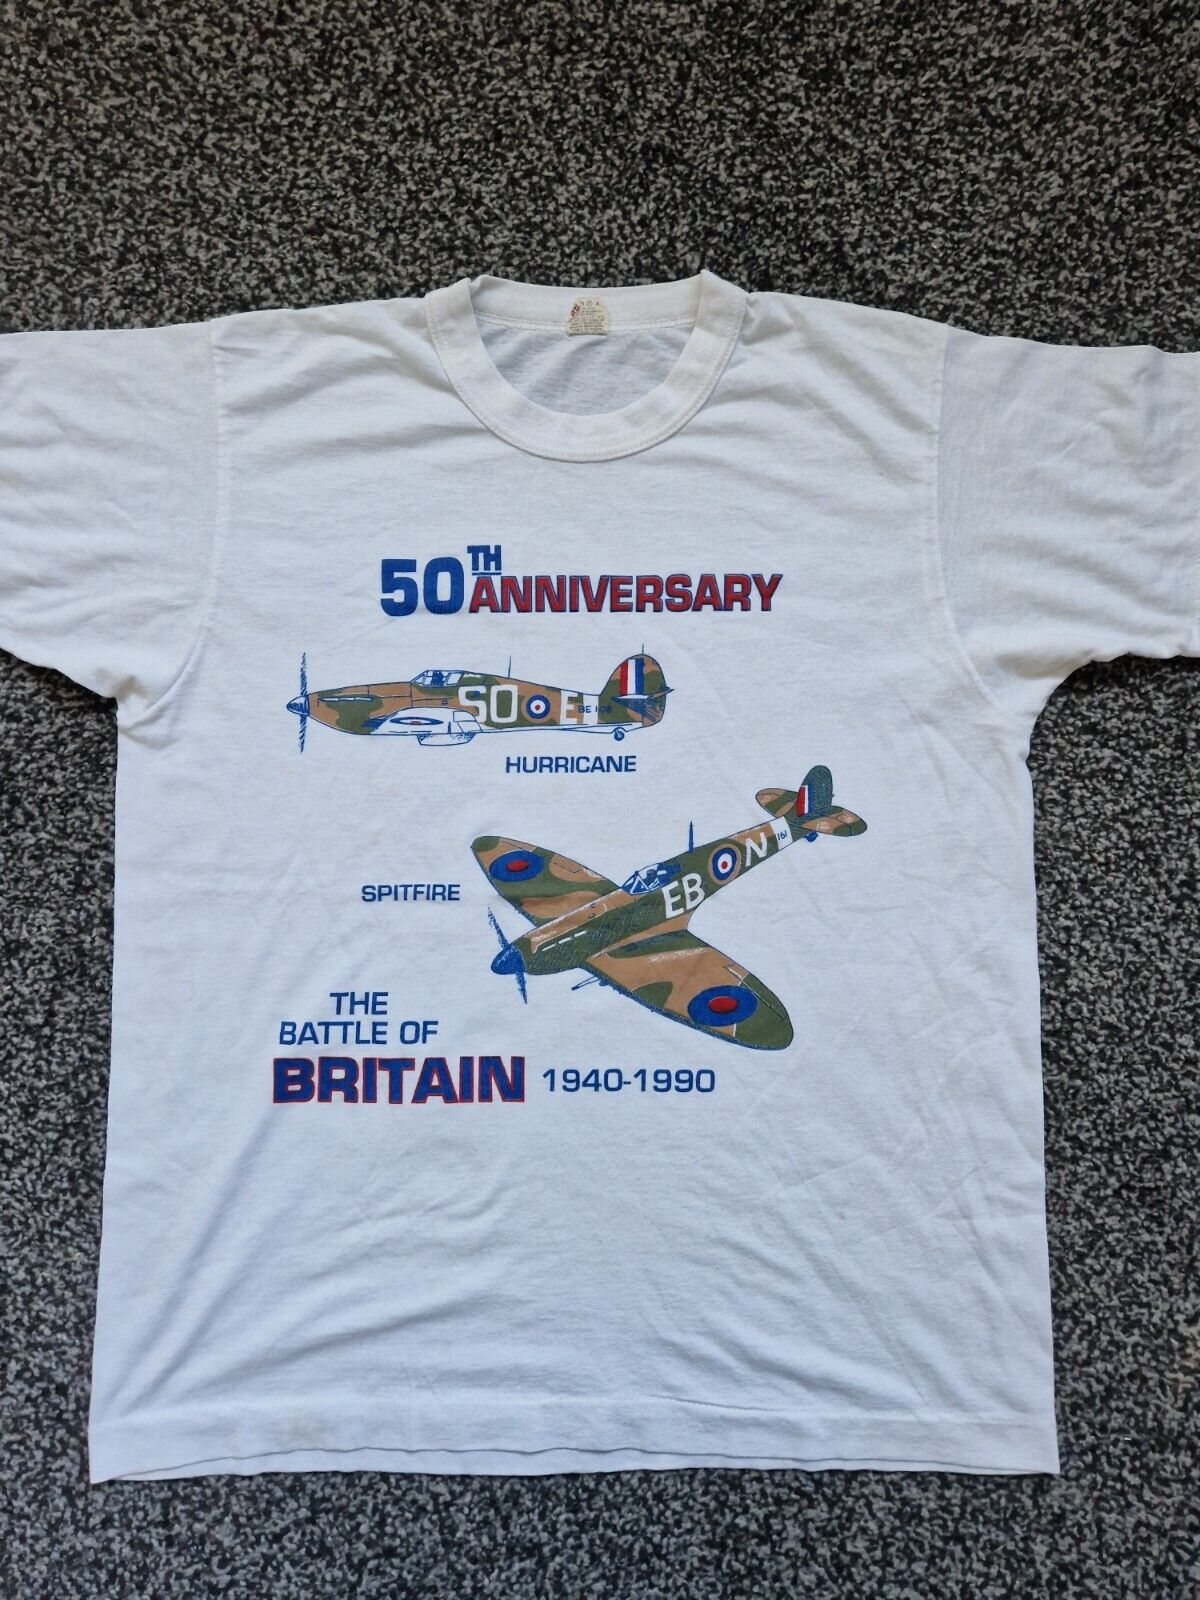 Vintage battle of britain t-shirt in excellent condition SIZE M.